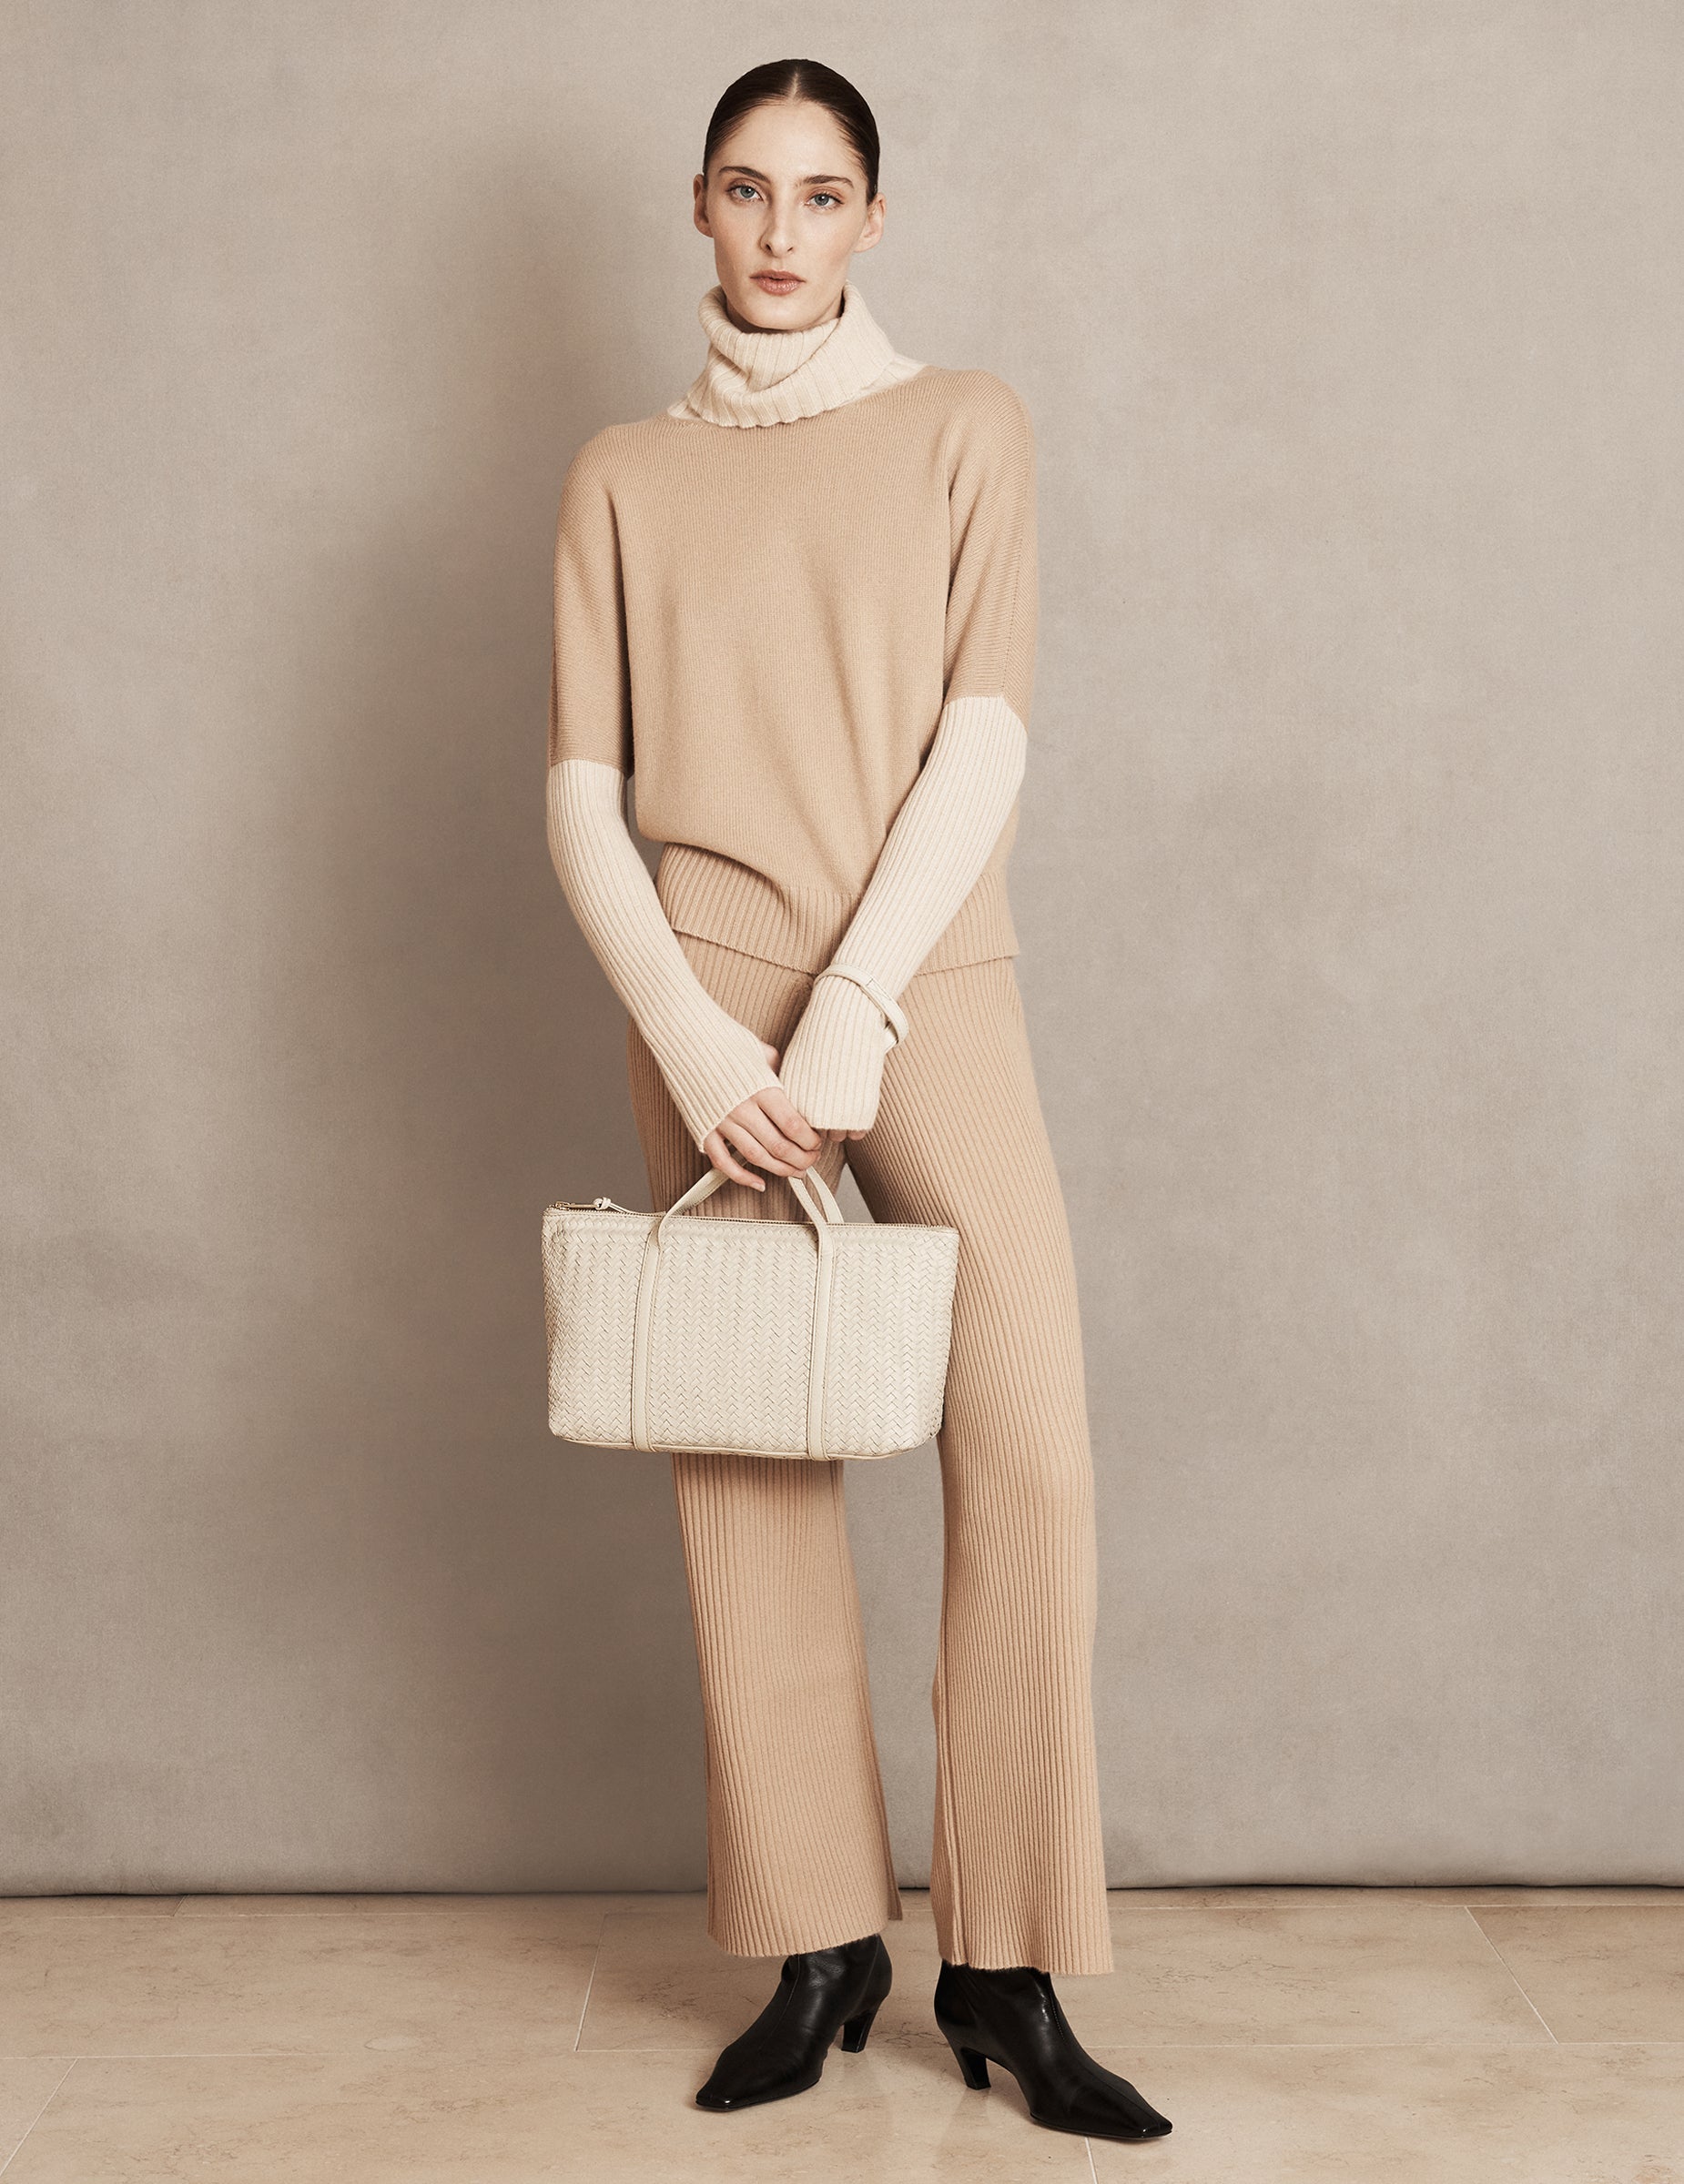 Outfit-Post: Cashmere Coat & Sofia Coppola Bag | Haute Edition